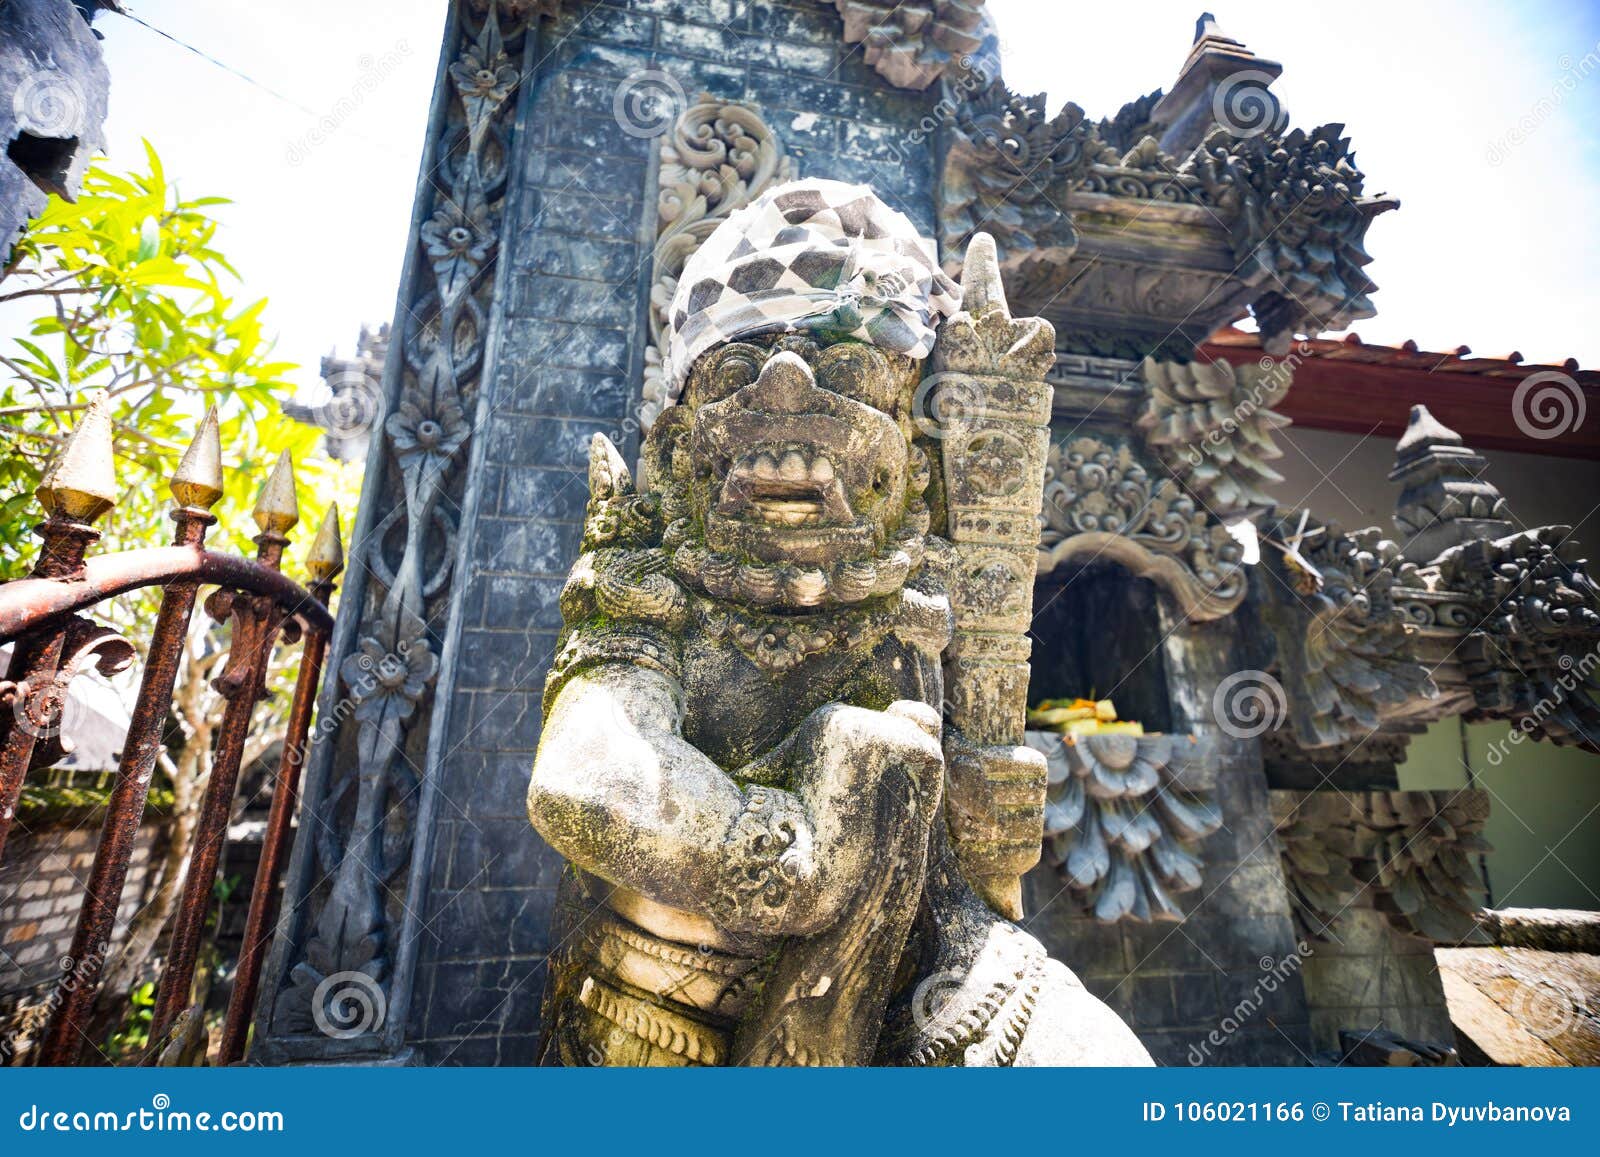 Small Local Bali Temple in Nusa Dua, Bali Stock Photo - Image of